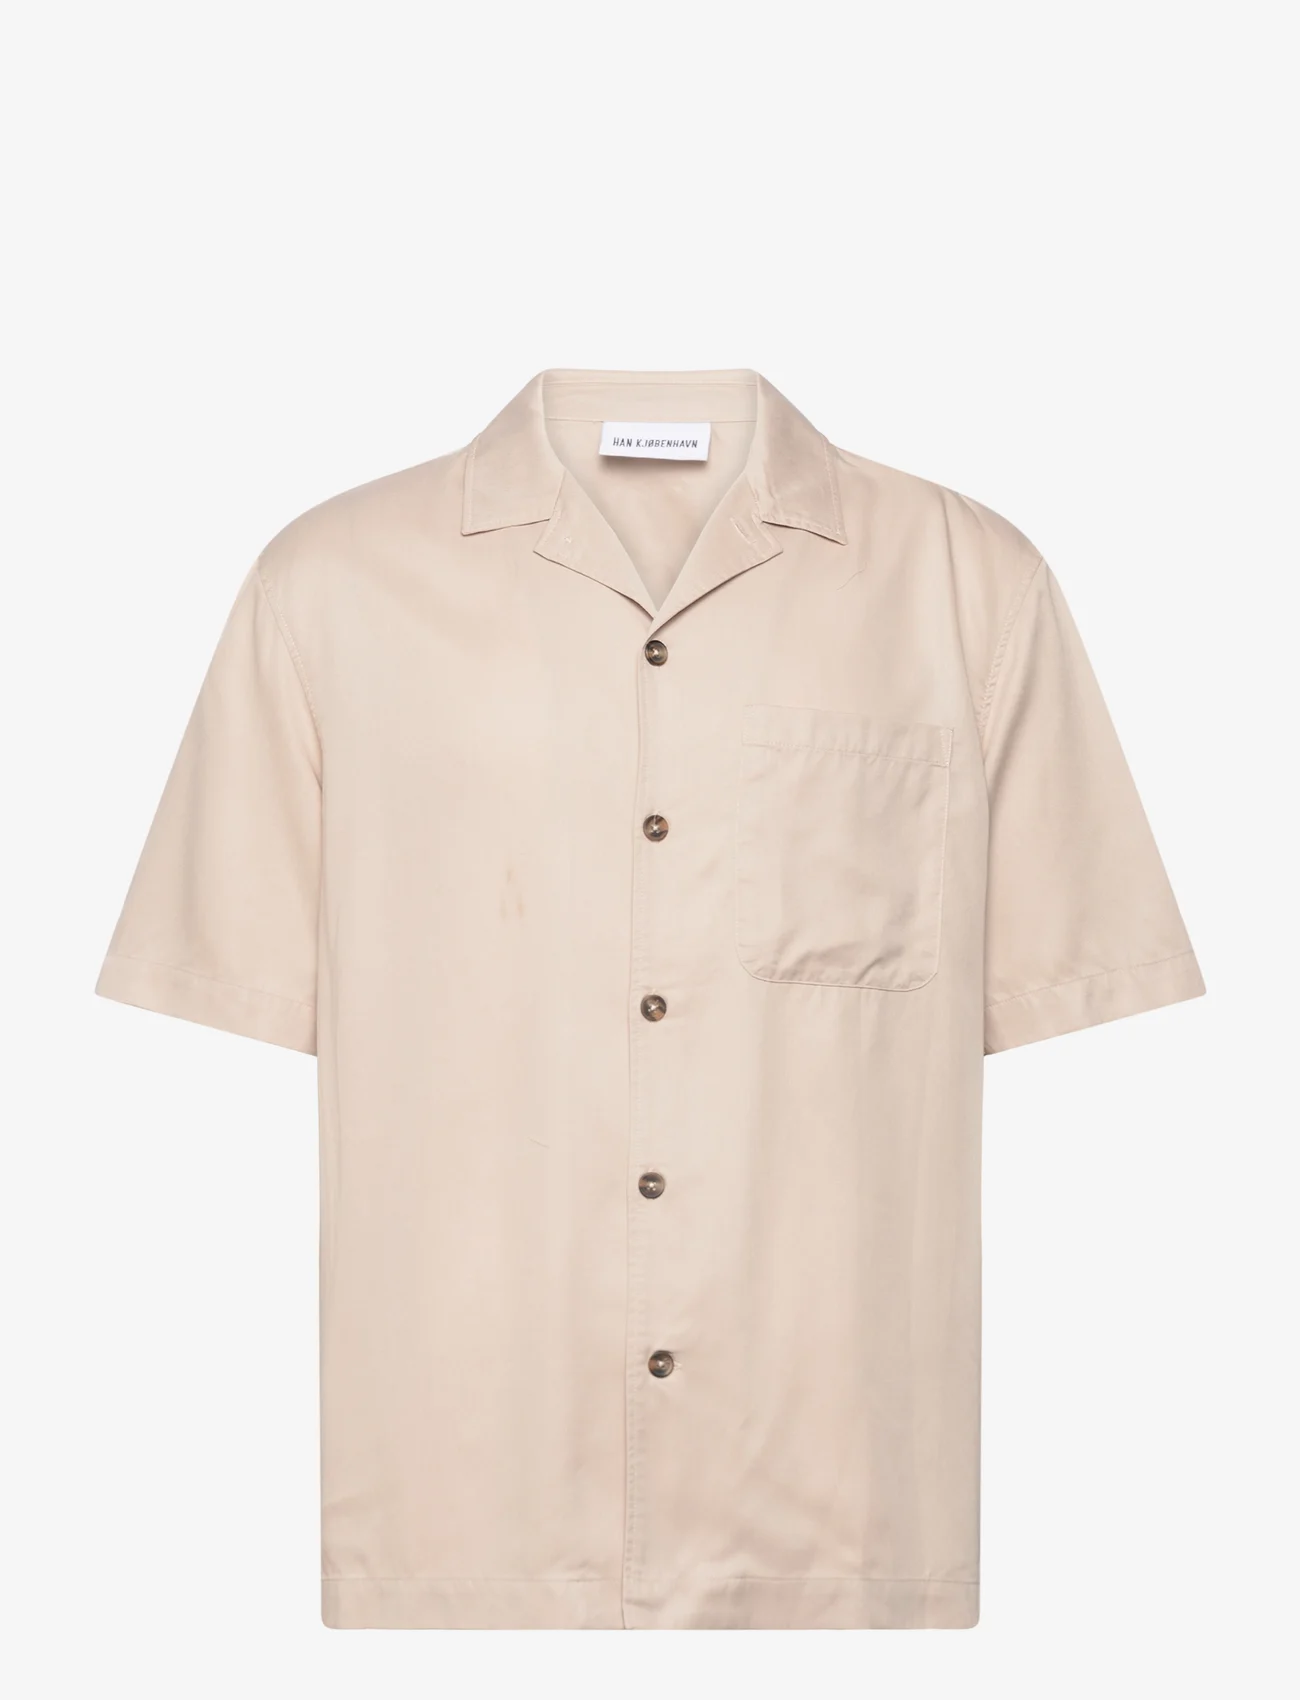 HAN Kjøbenhavn - Tencel Summer Shirt - kortærmede t-shirts - sand - 0